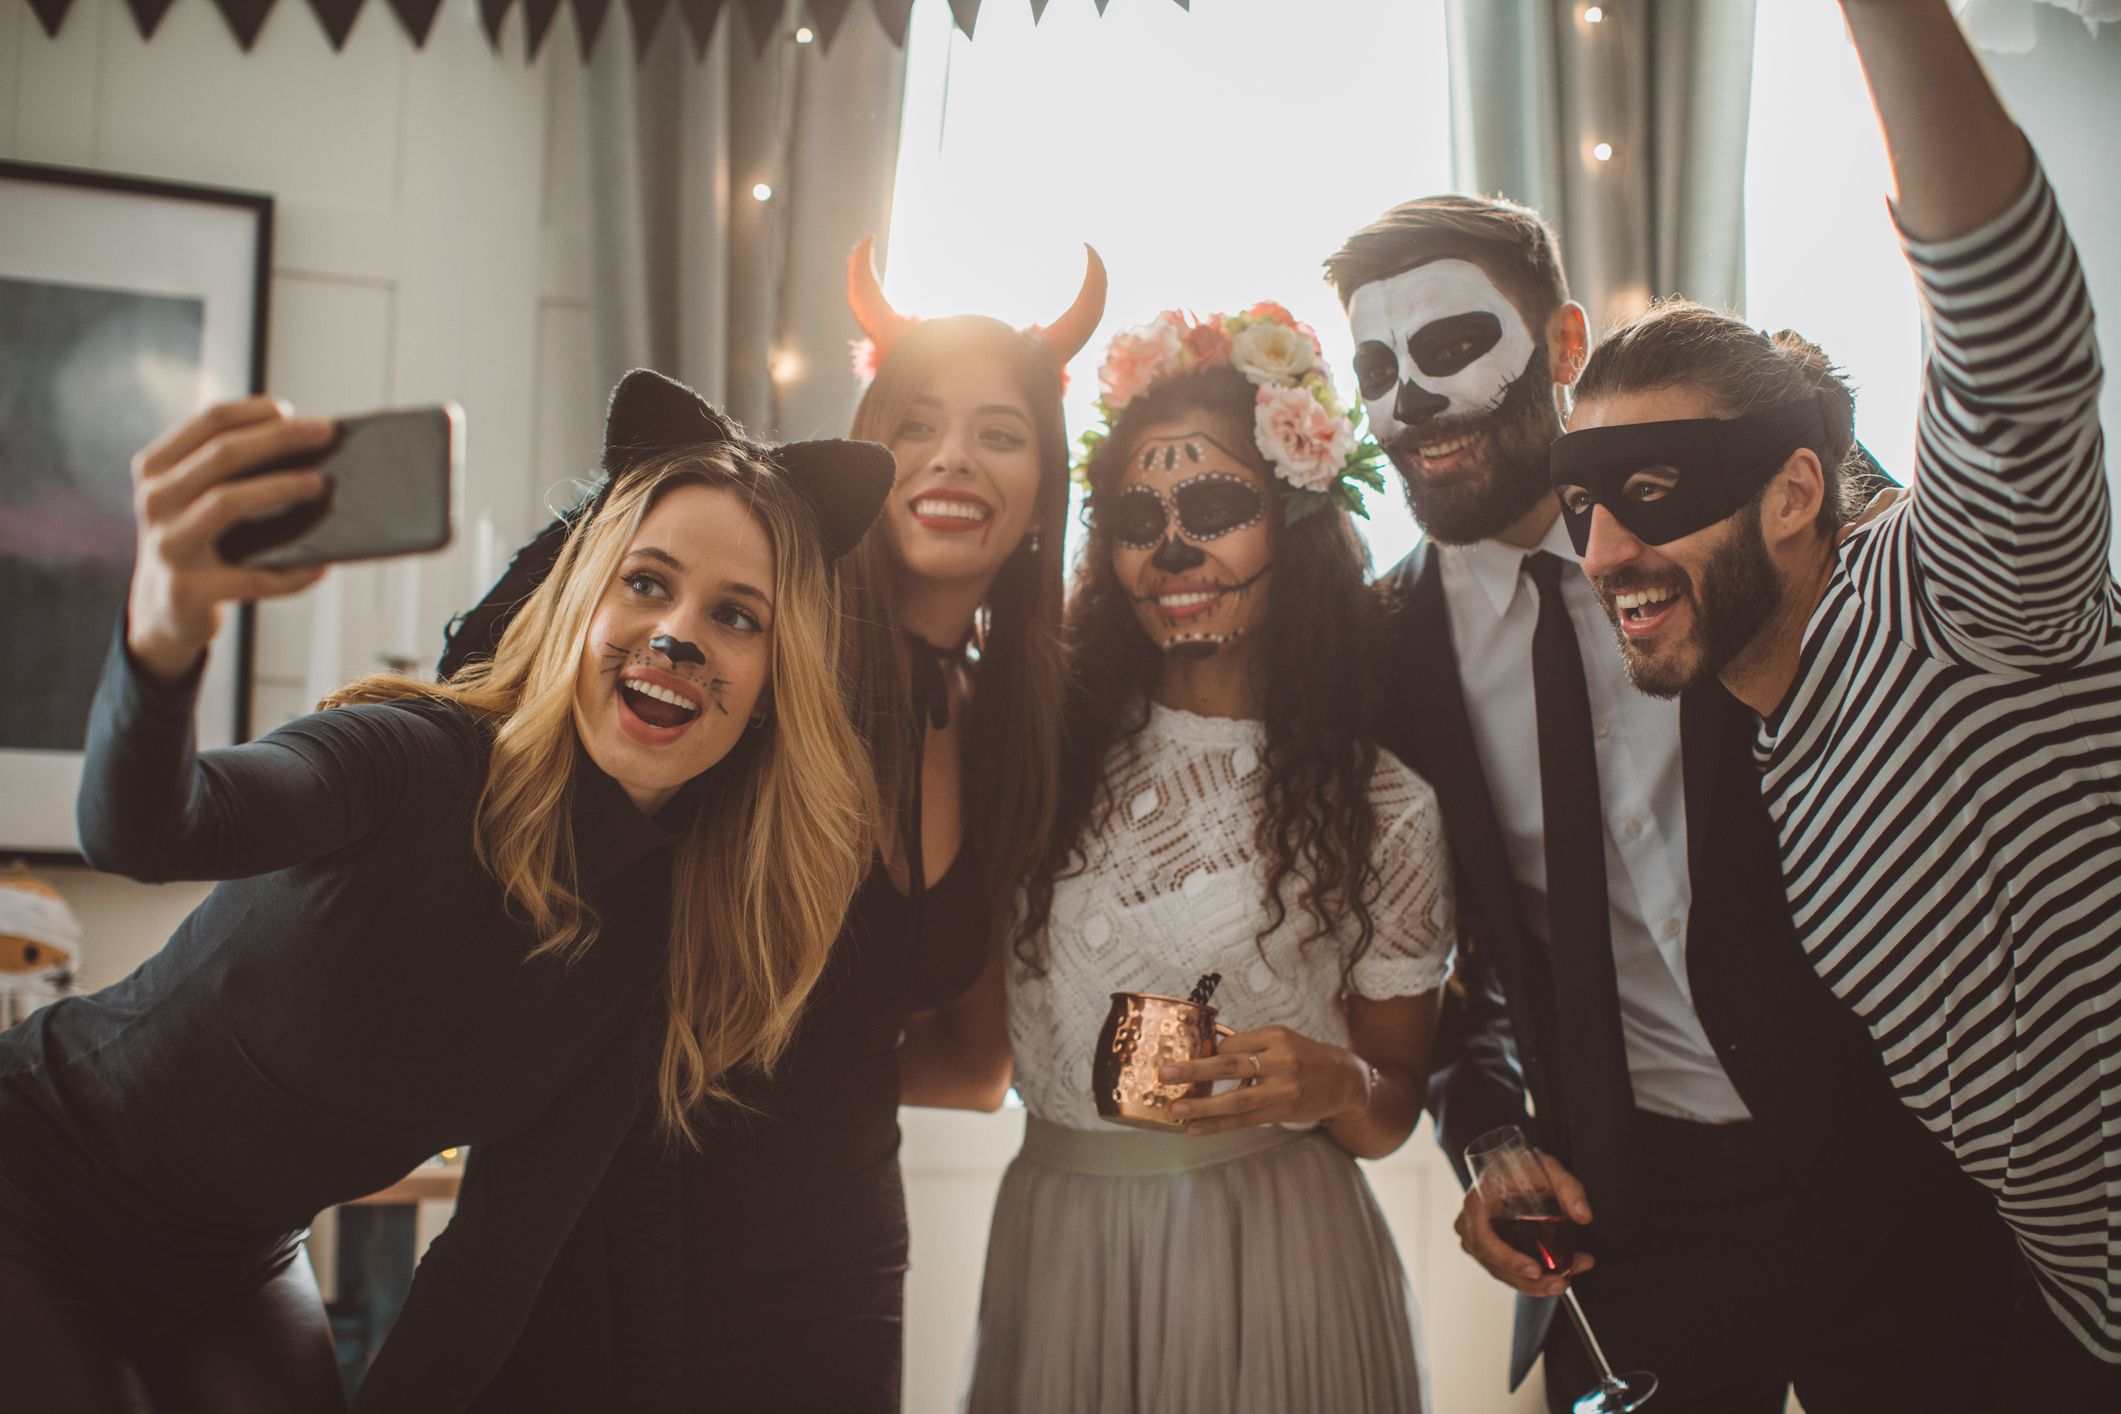 halloween costume ideas for teen couples